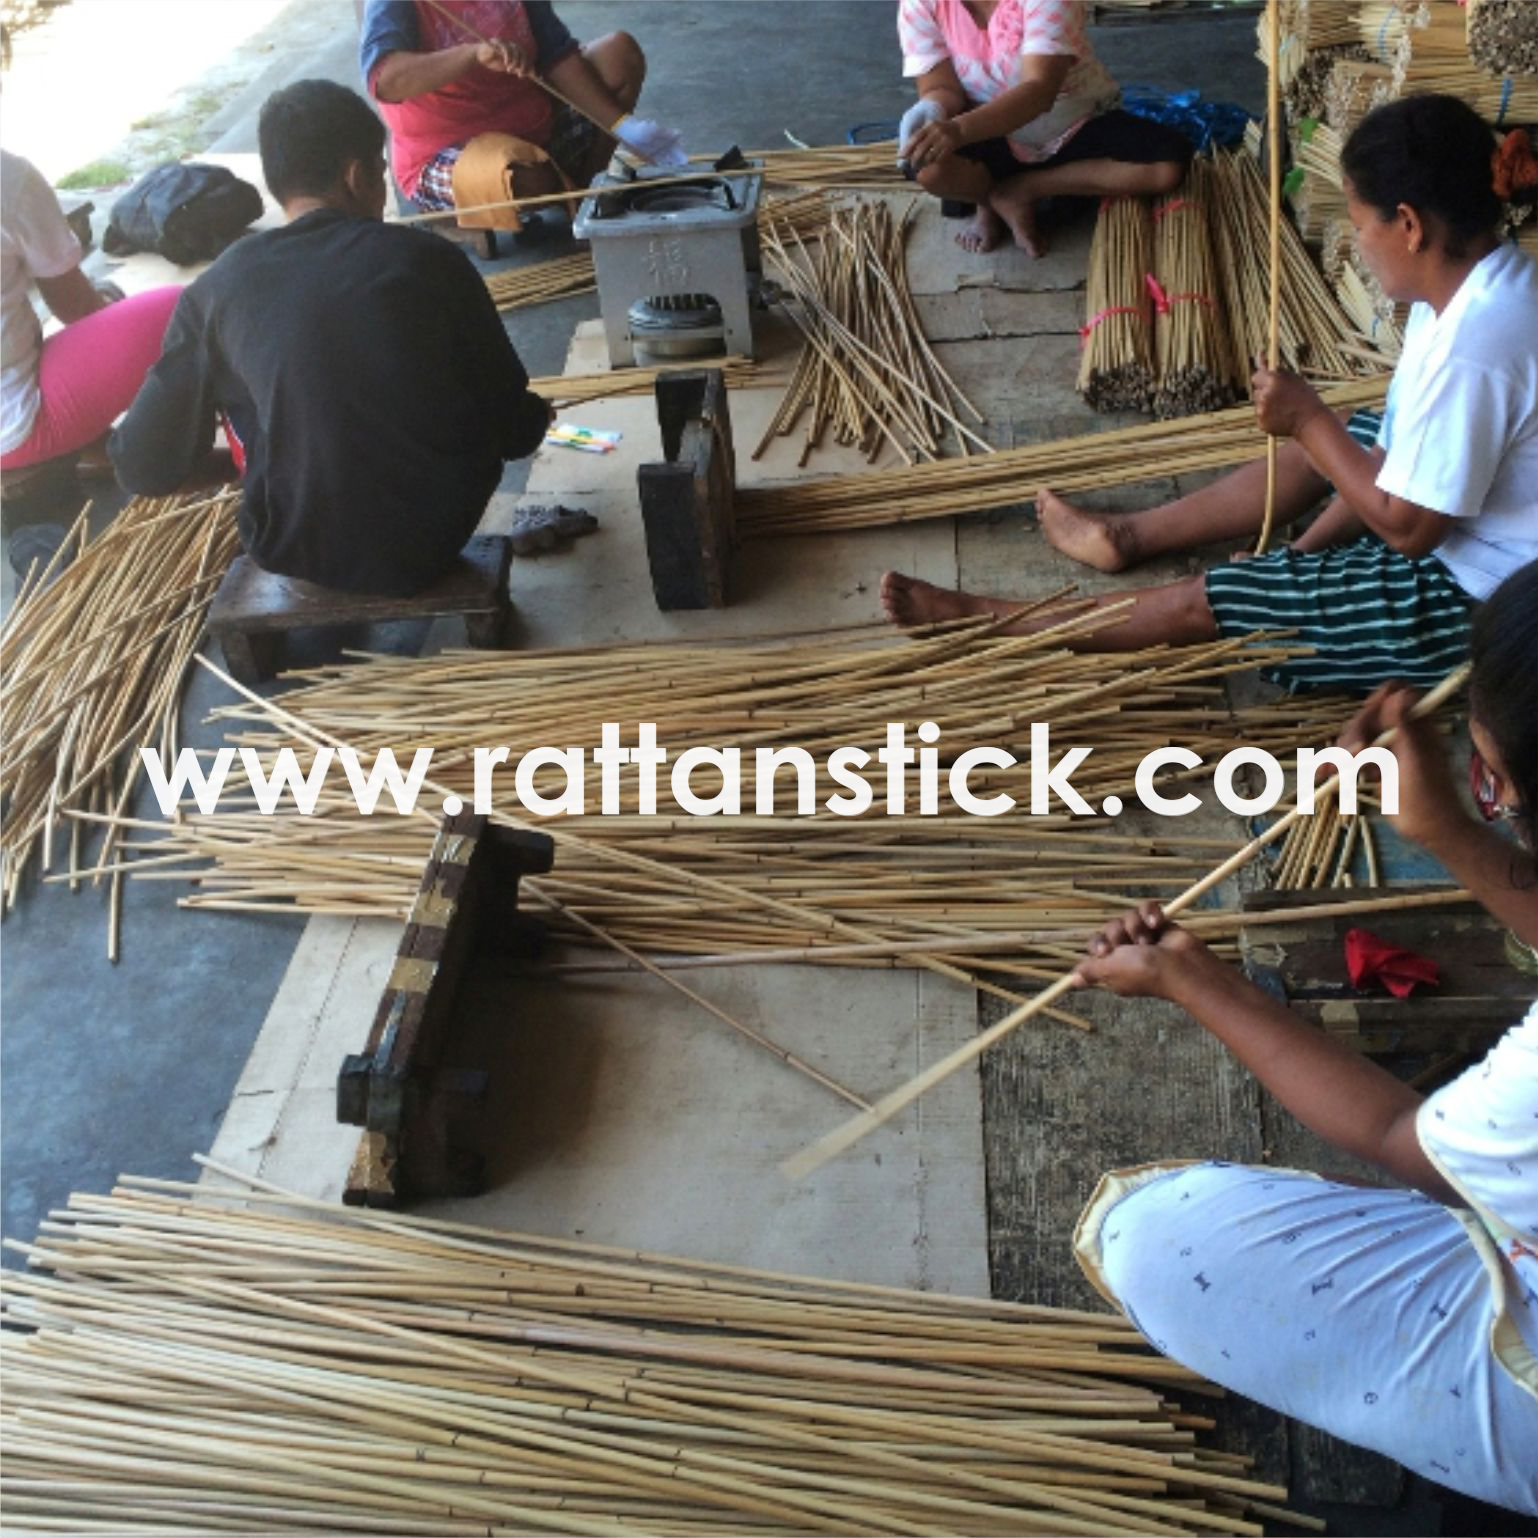 The Process of Making Rattan Sticks